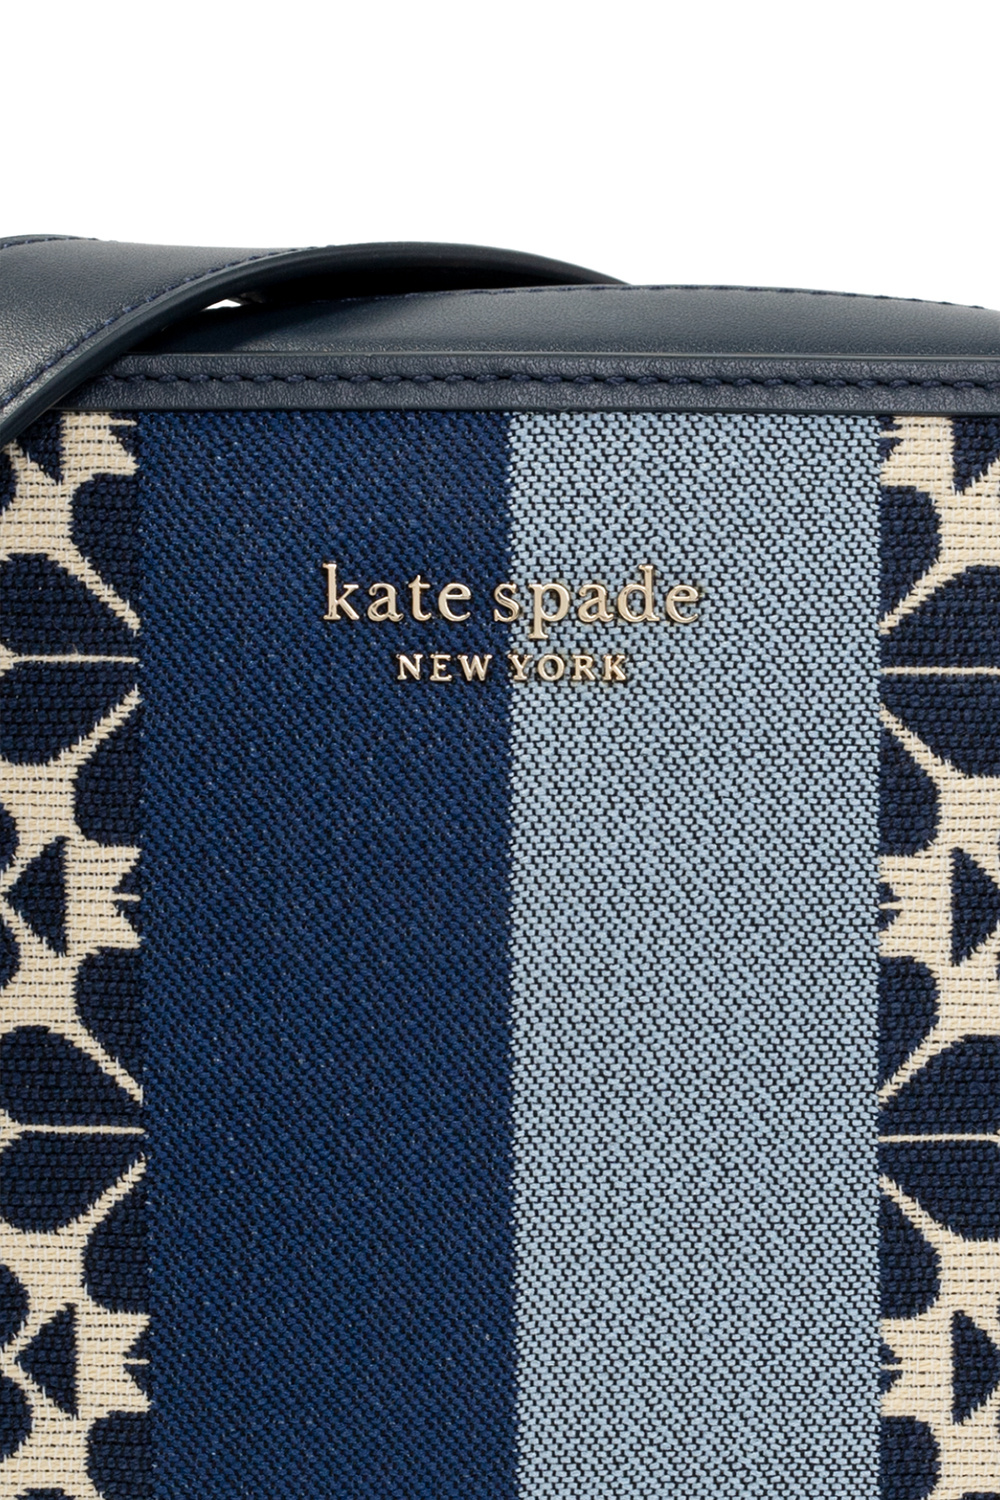 Kate Spade louis vuitton floral monogram embellished tote eve bag item